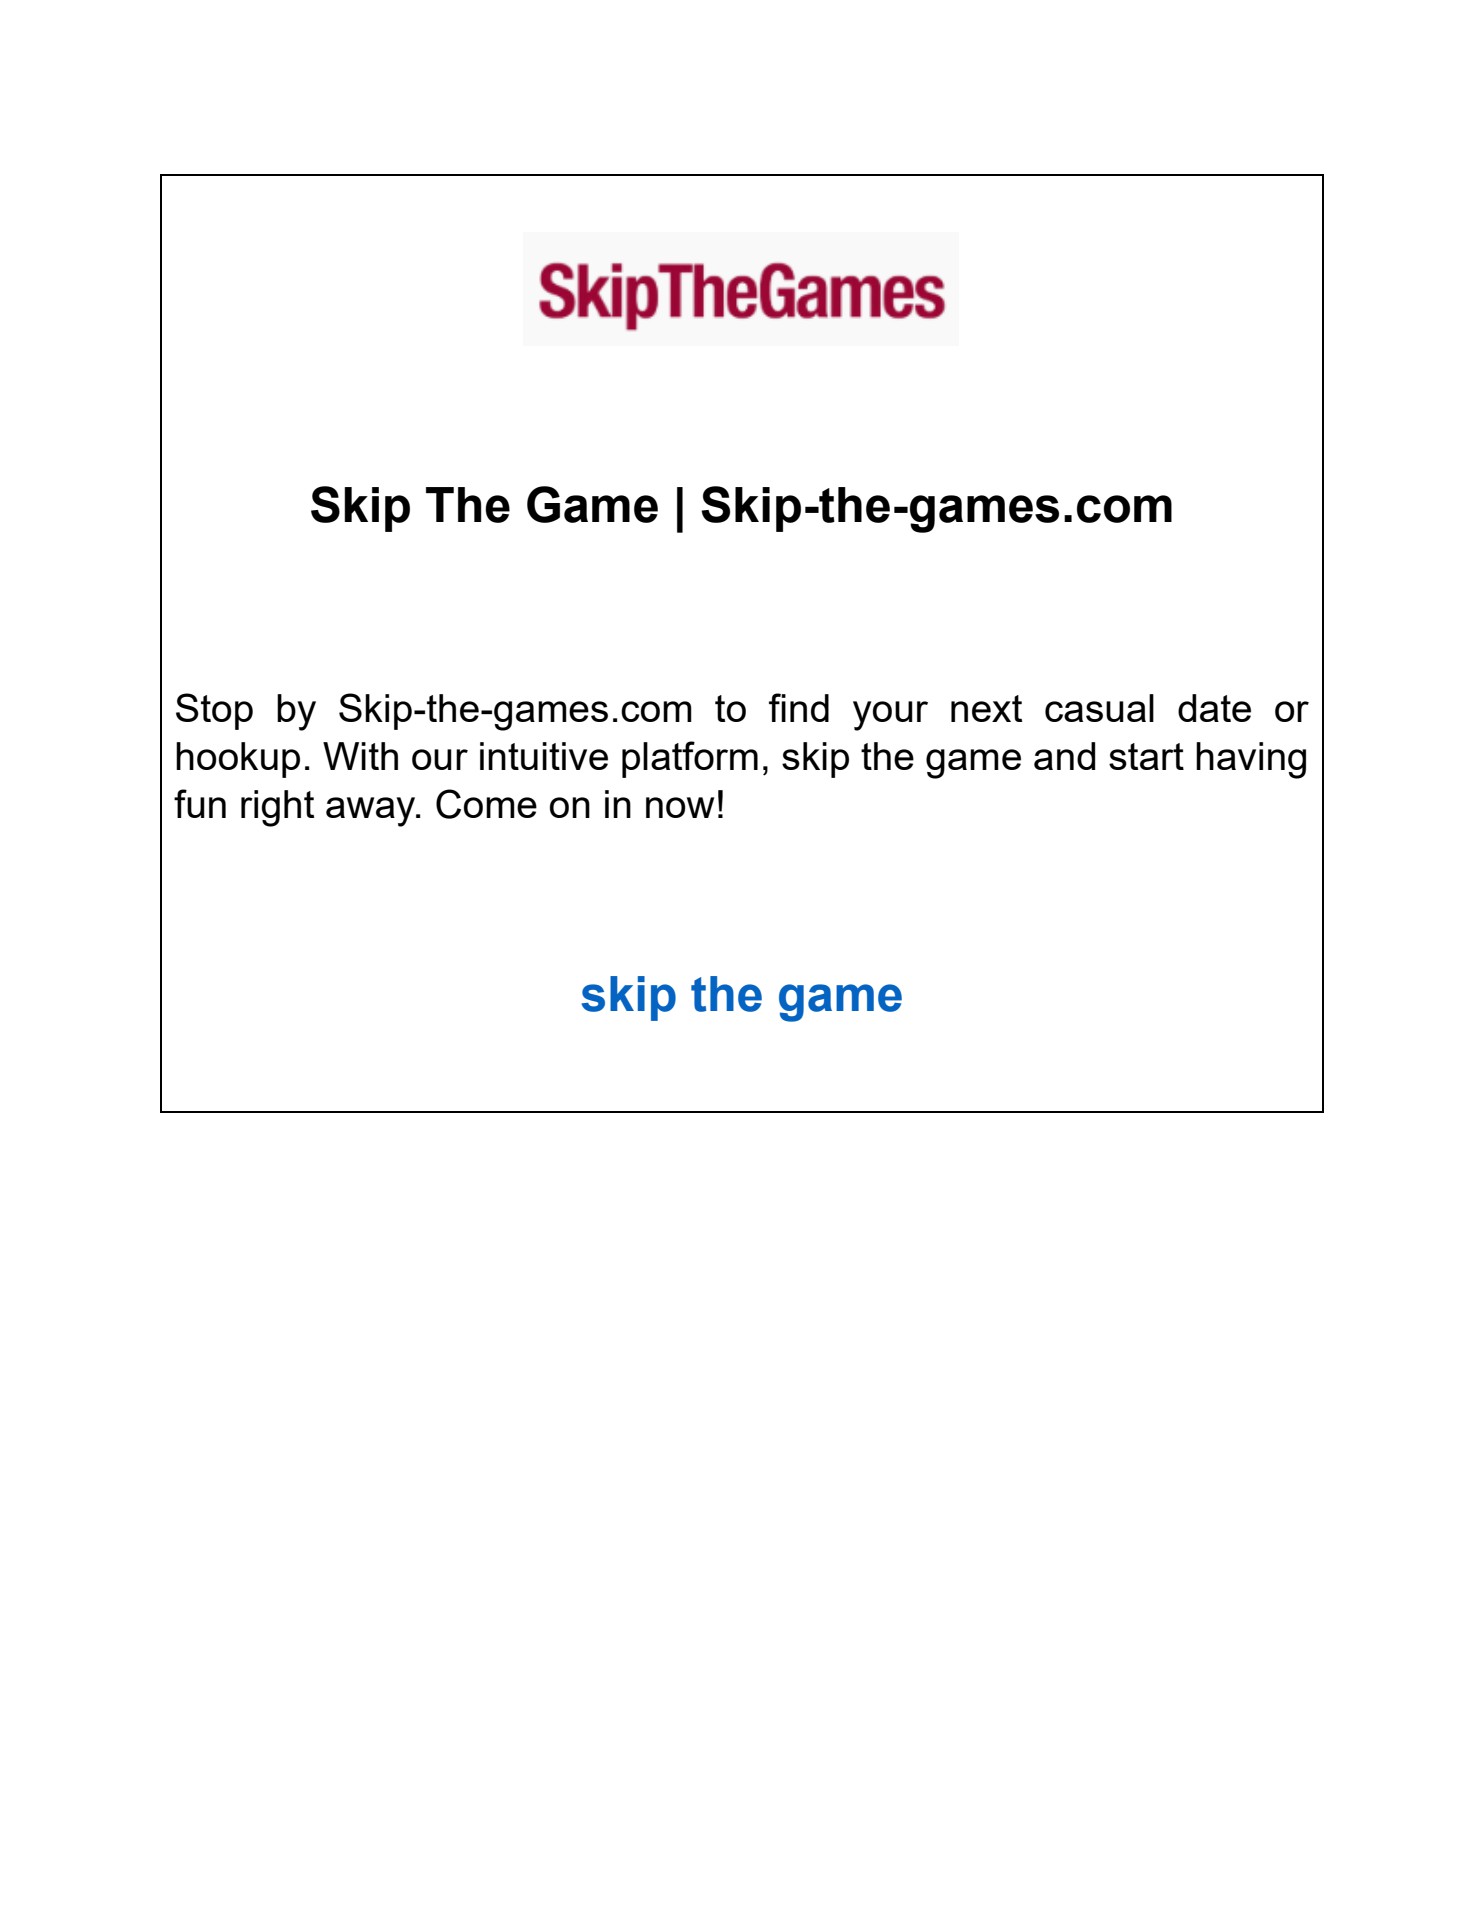 batte ronald recommends Skip Tge Games